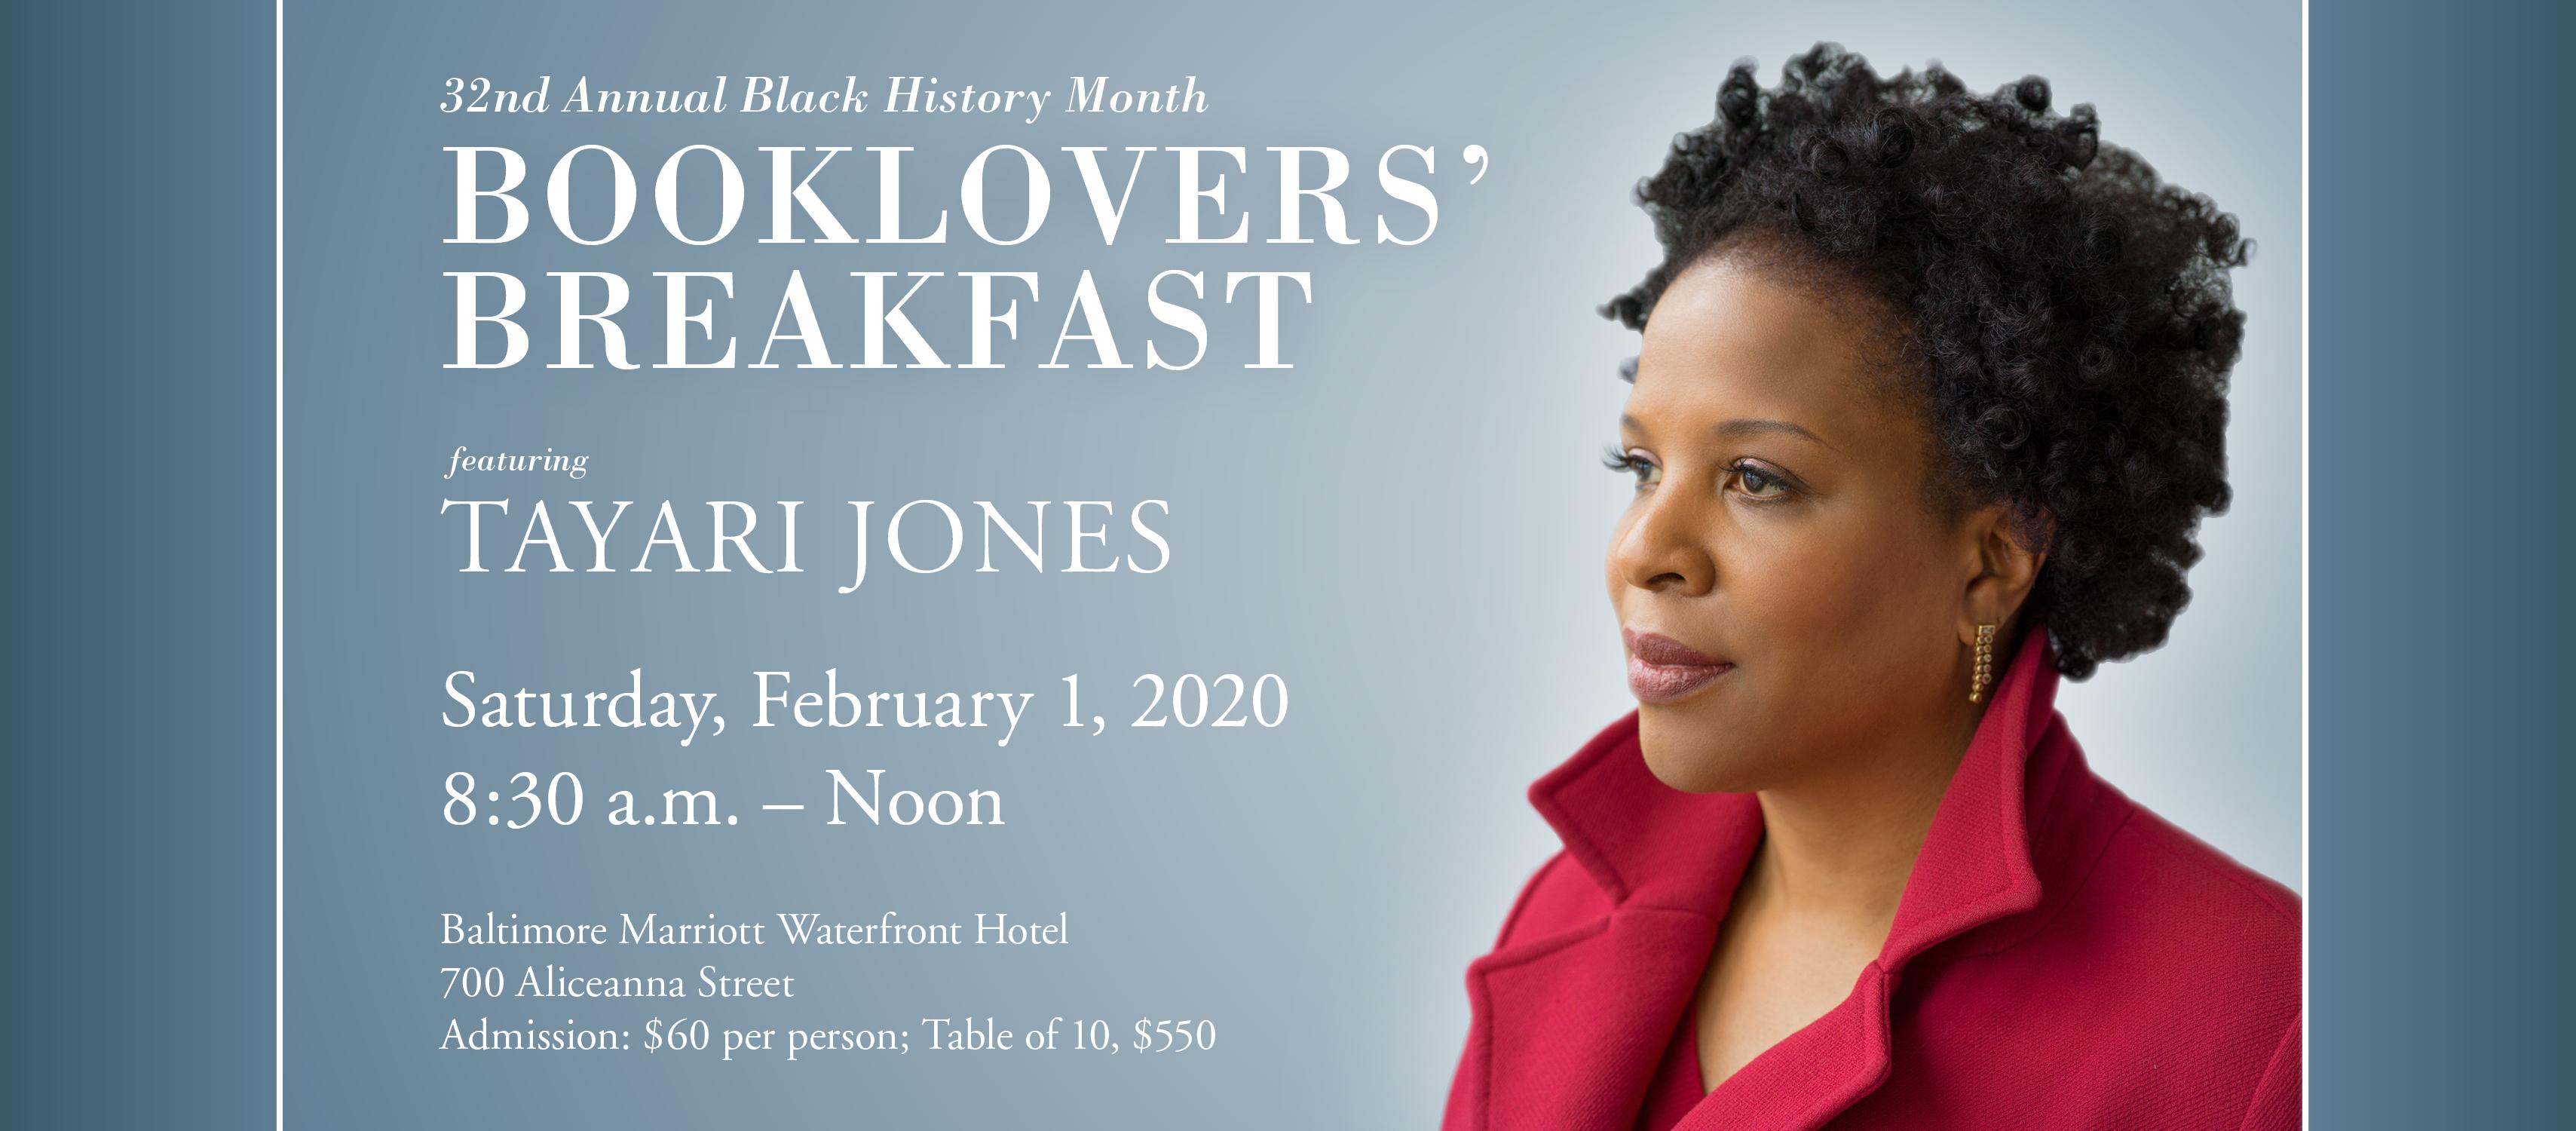 Booklovers' Breakfast featuring Tayari Jones